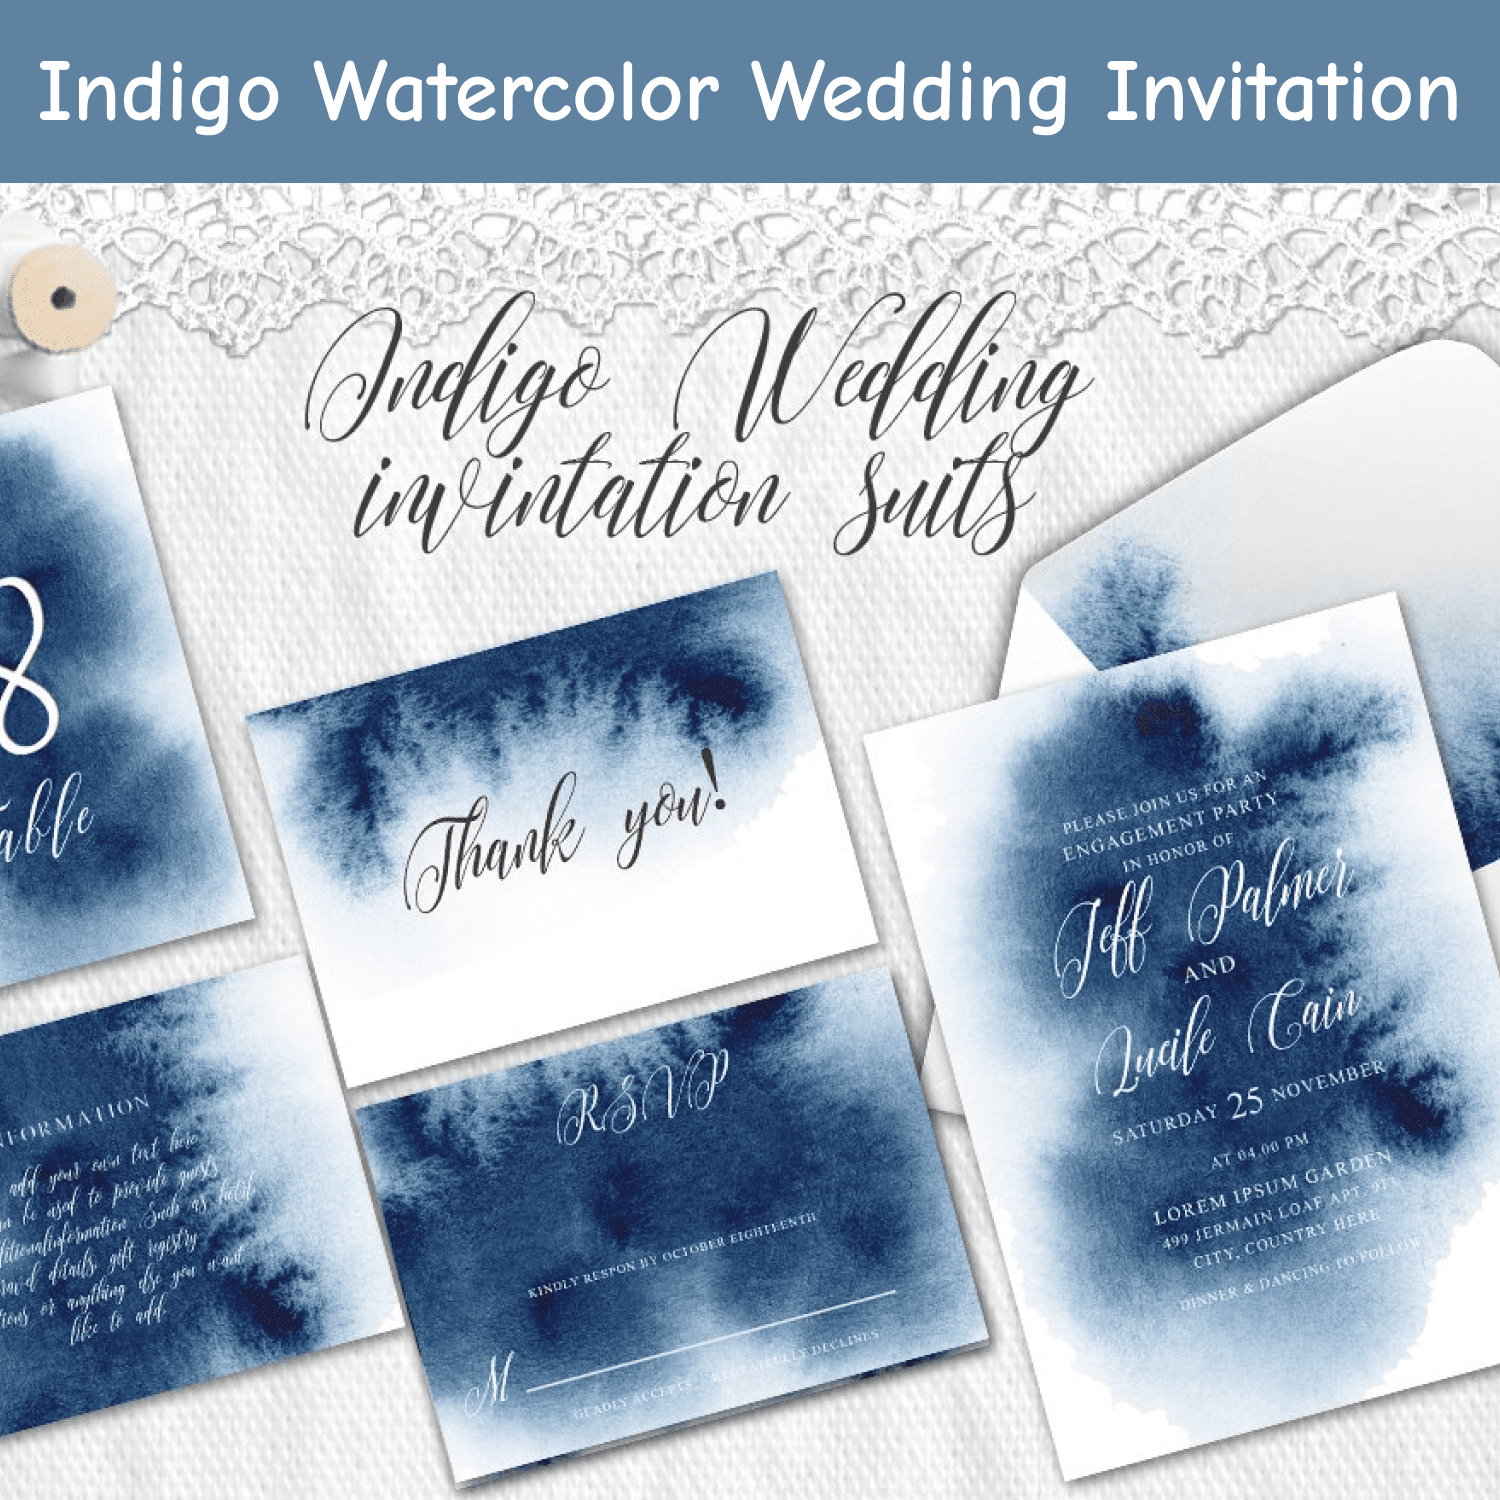 Indigo Watercolor Wedding Invitation cover 1500x1500 1